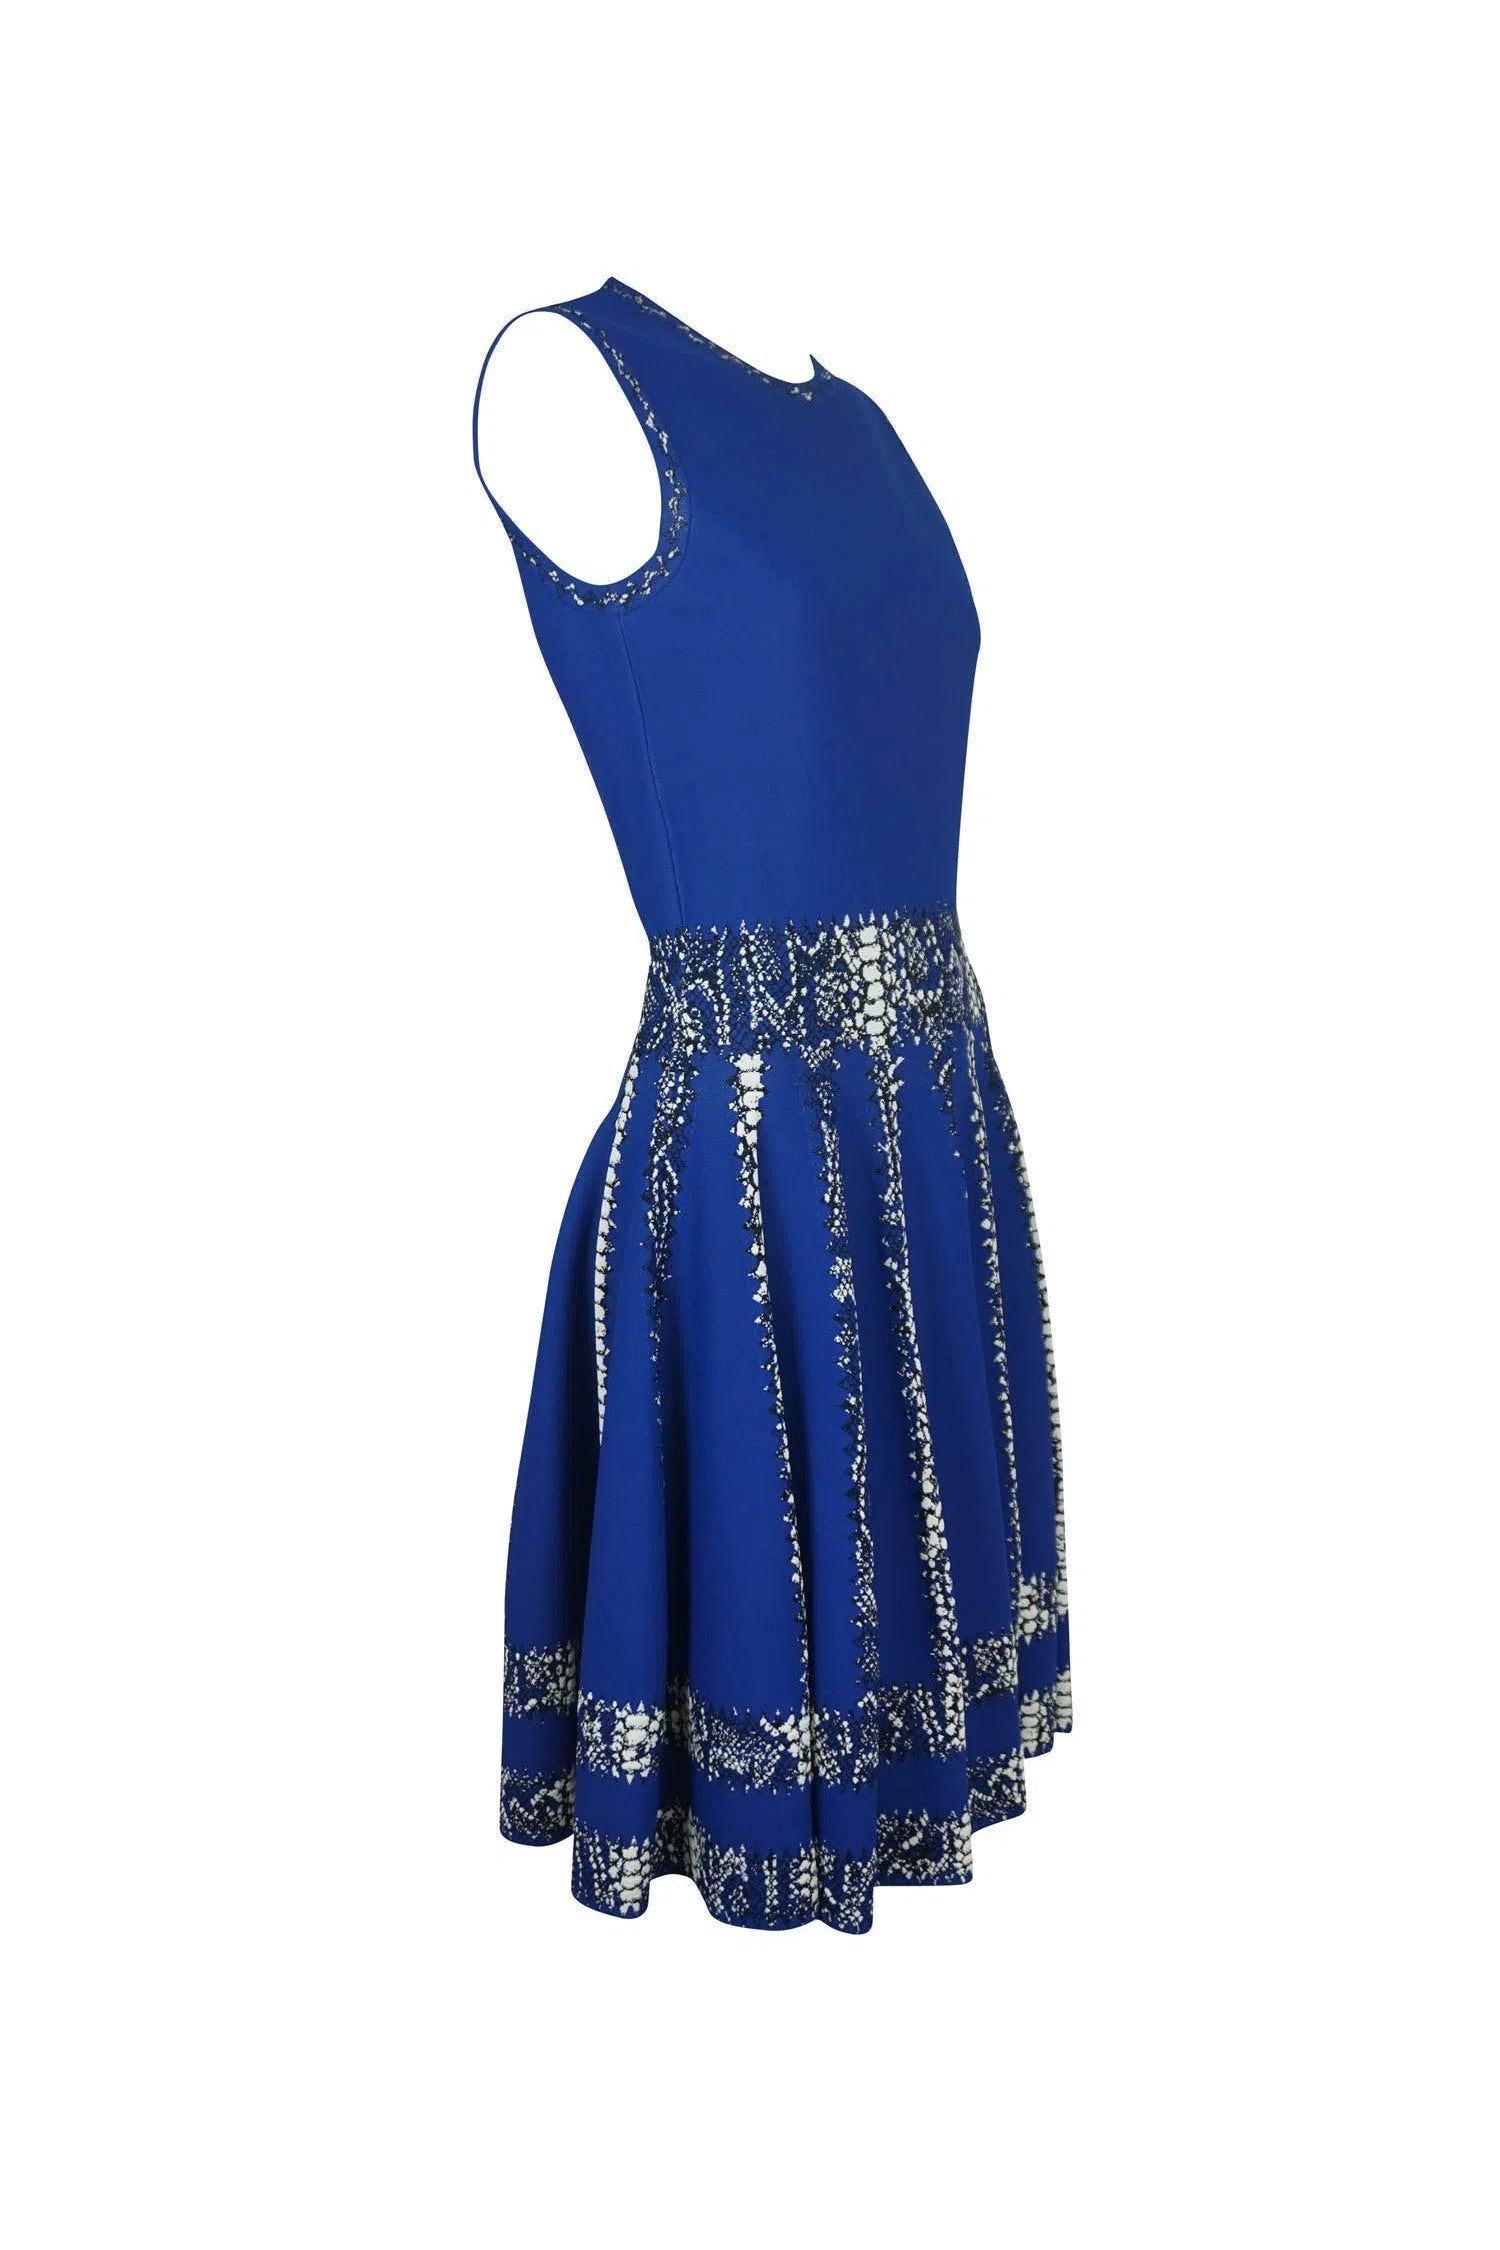 Alexander McQueen Blue Fit Flare Dress Resort 2015 - Foxy Couture Carmel